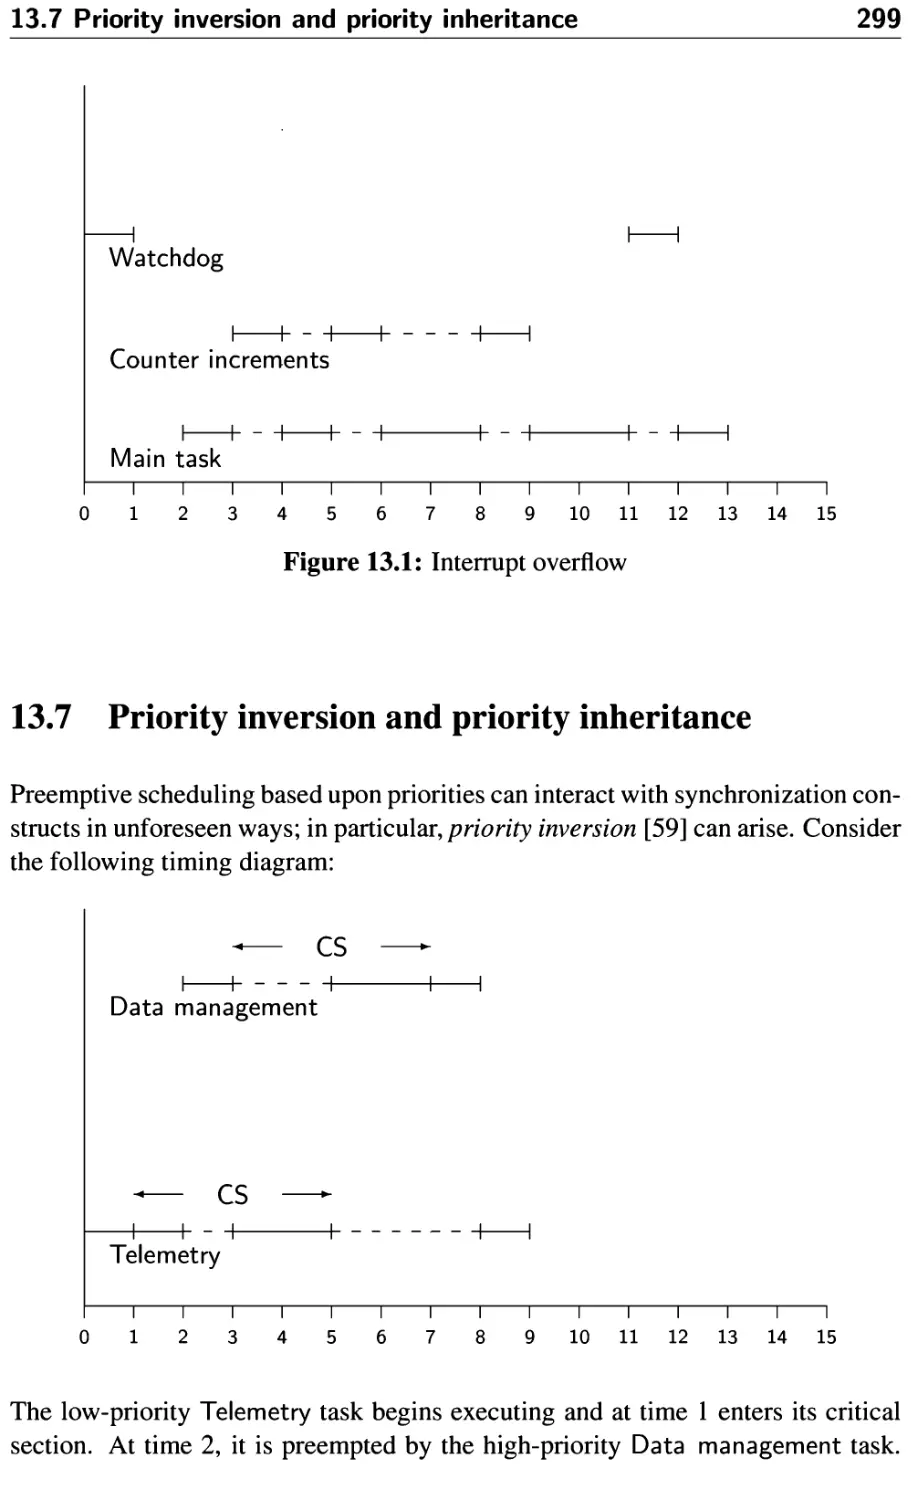 13.7 Priority inversion and priority inheritance